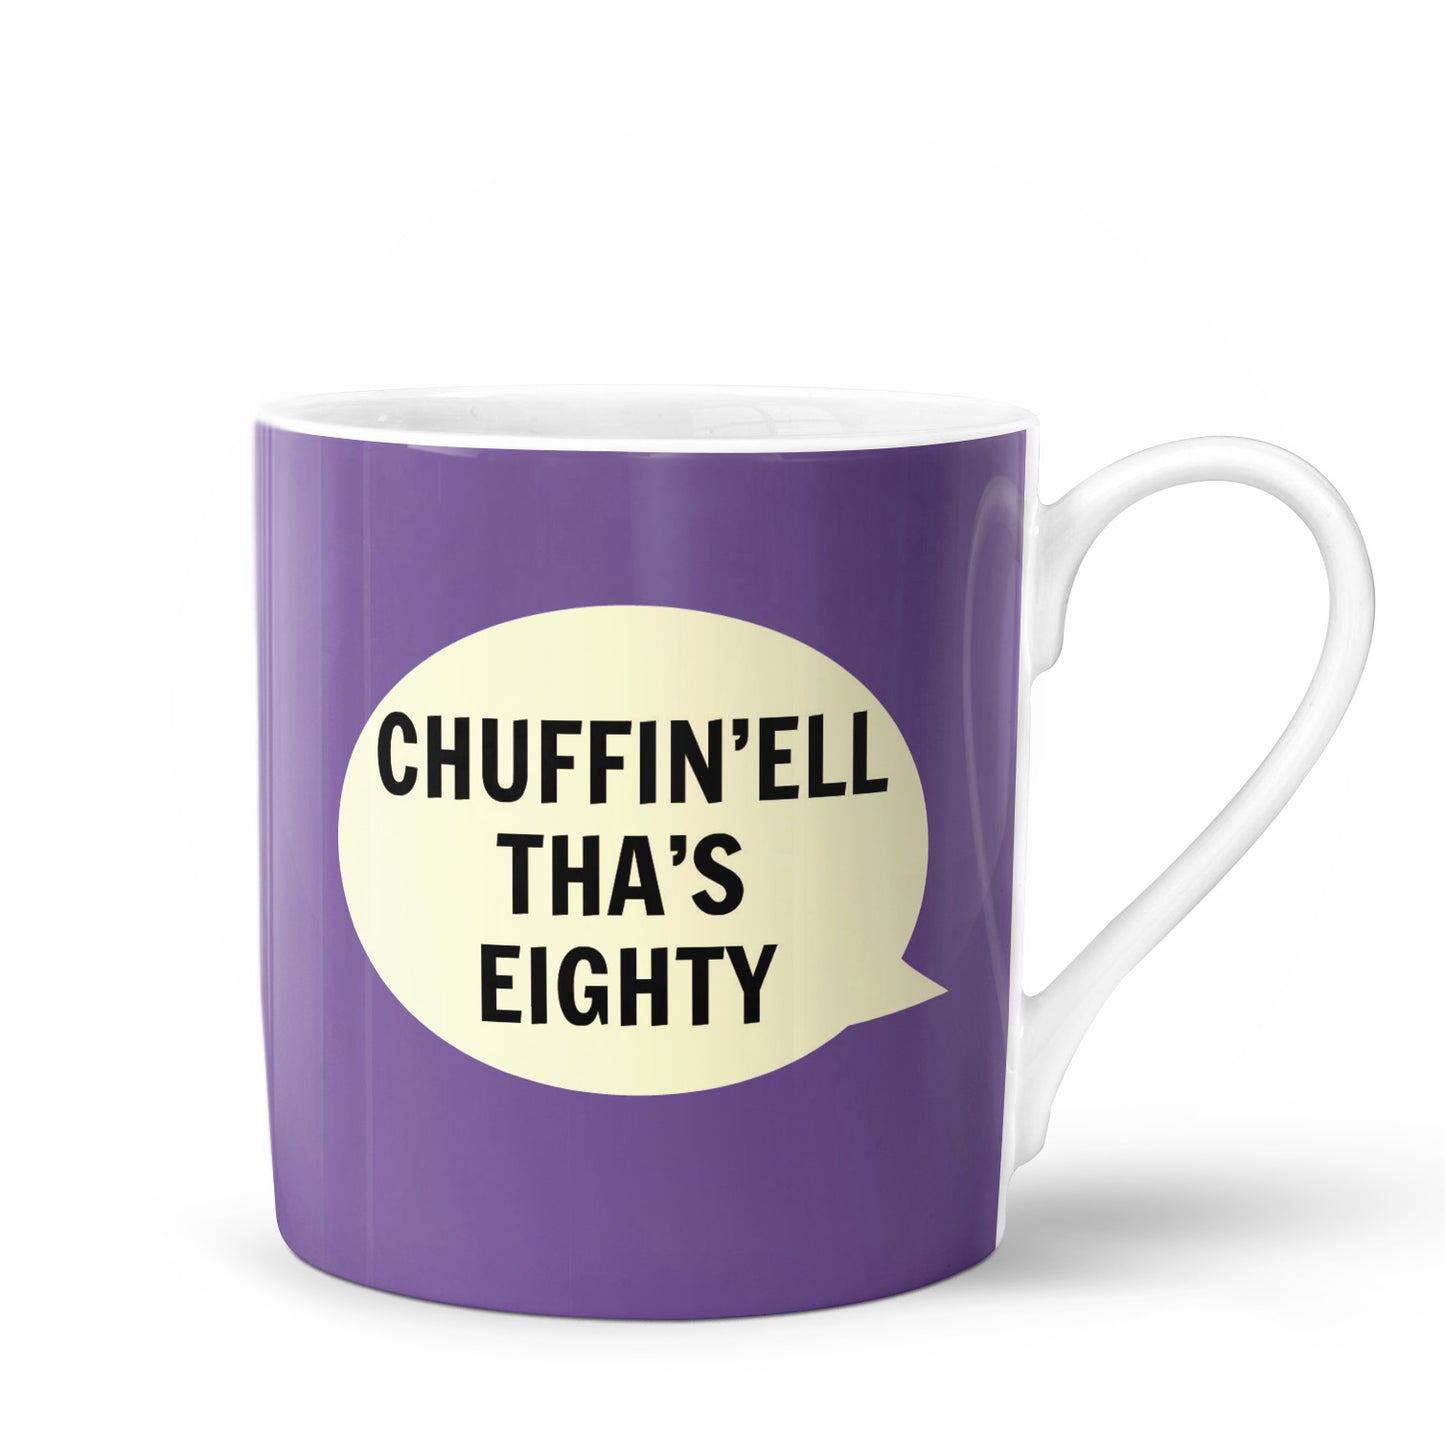 Chuffin'ell Tha's Eighty Bone China Mug - The Great Yorkshire Shop